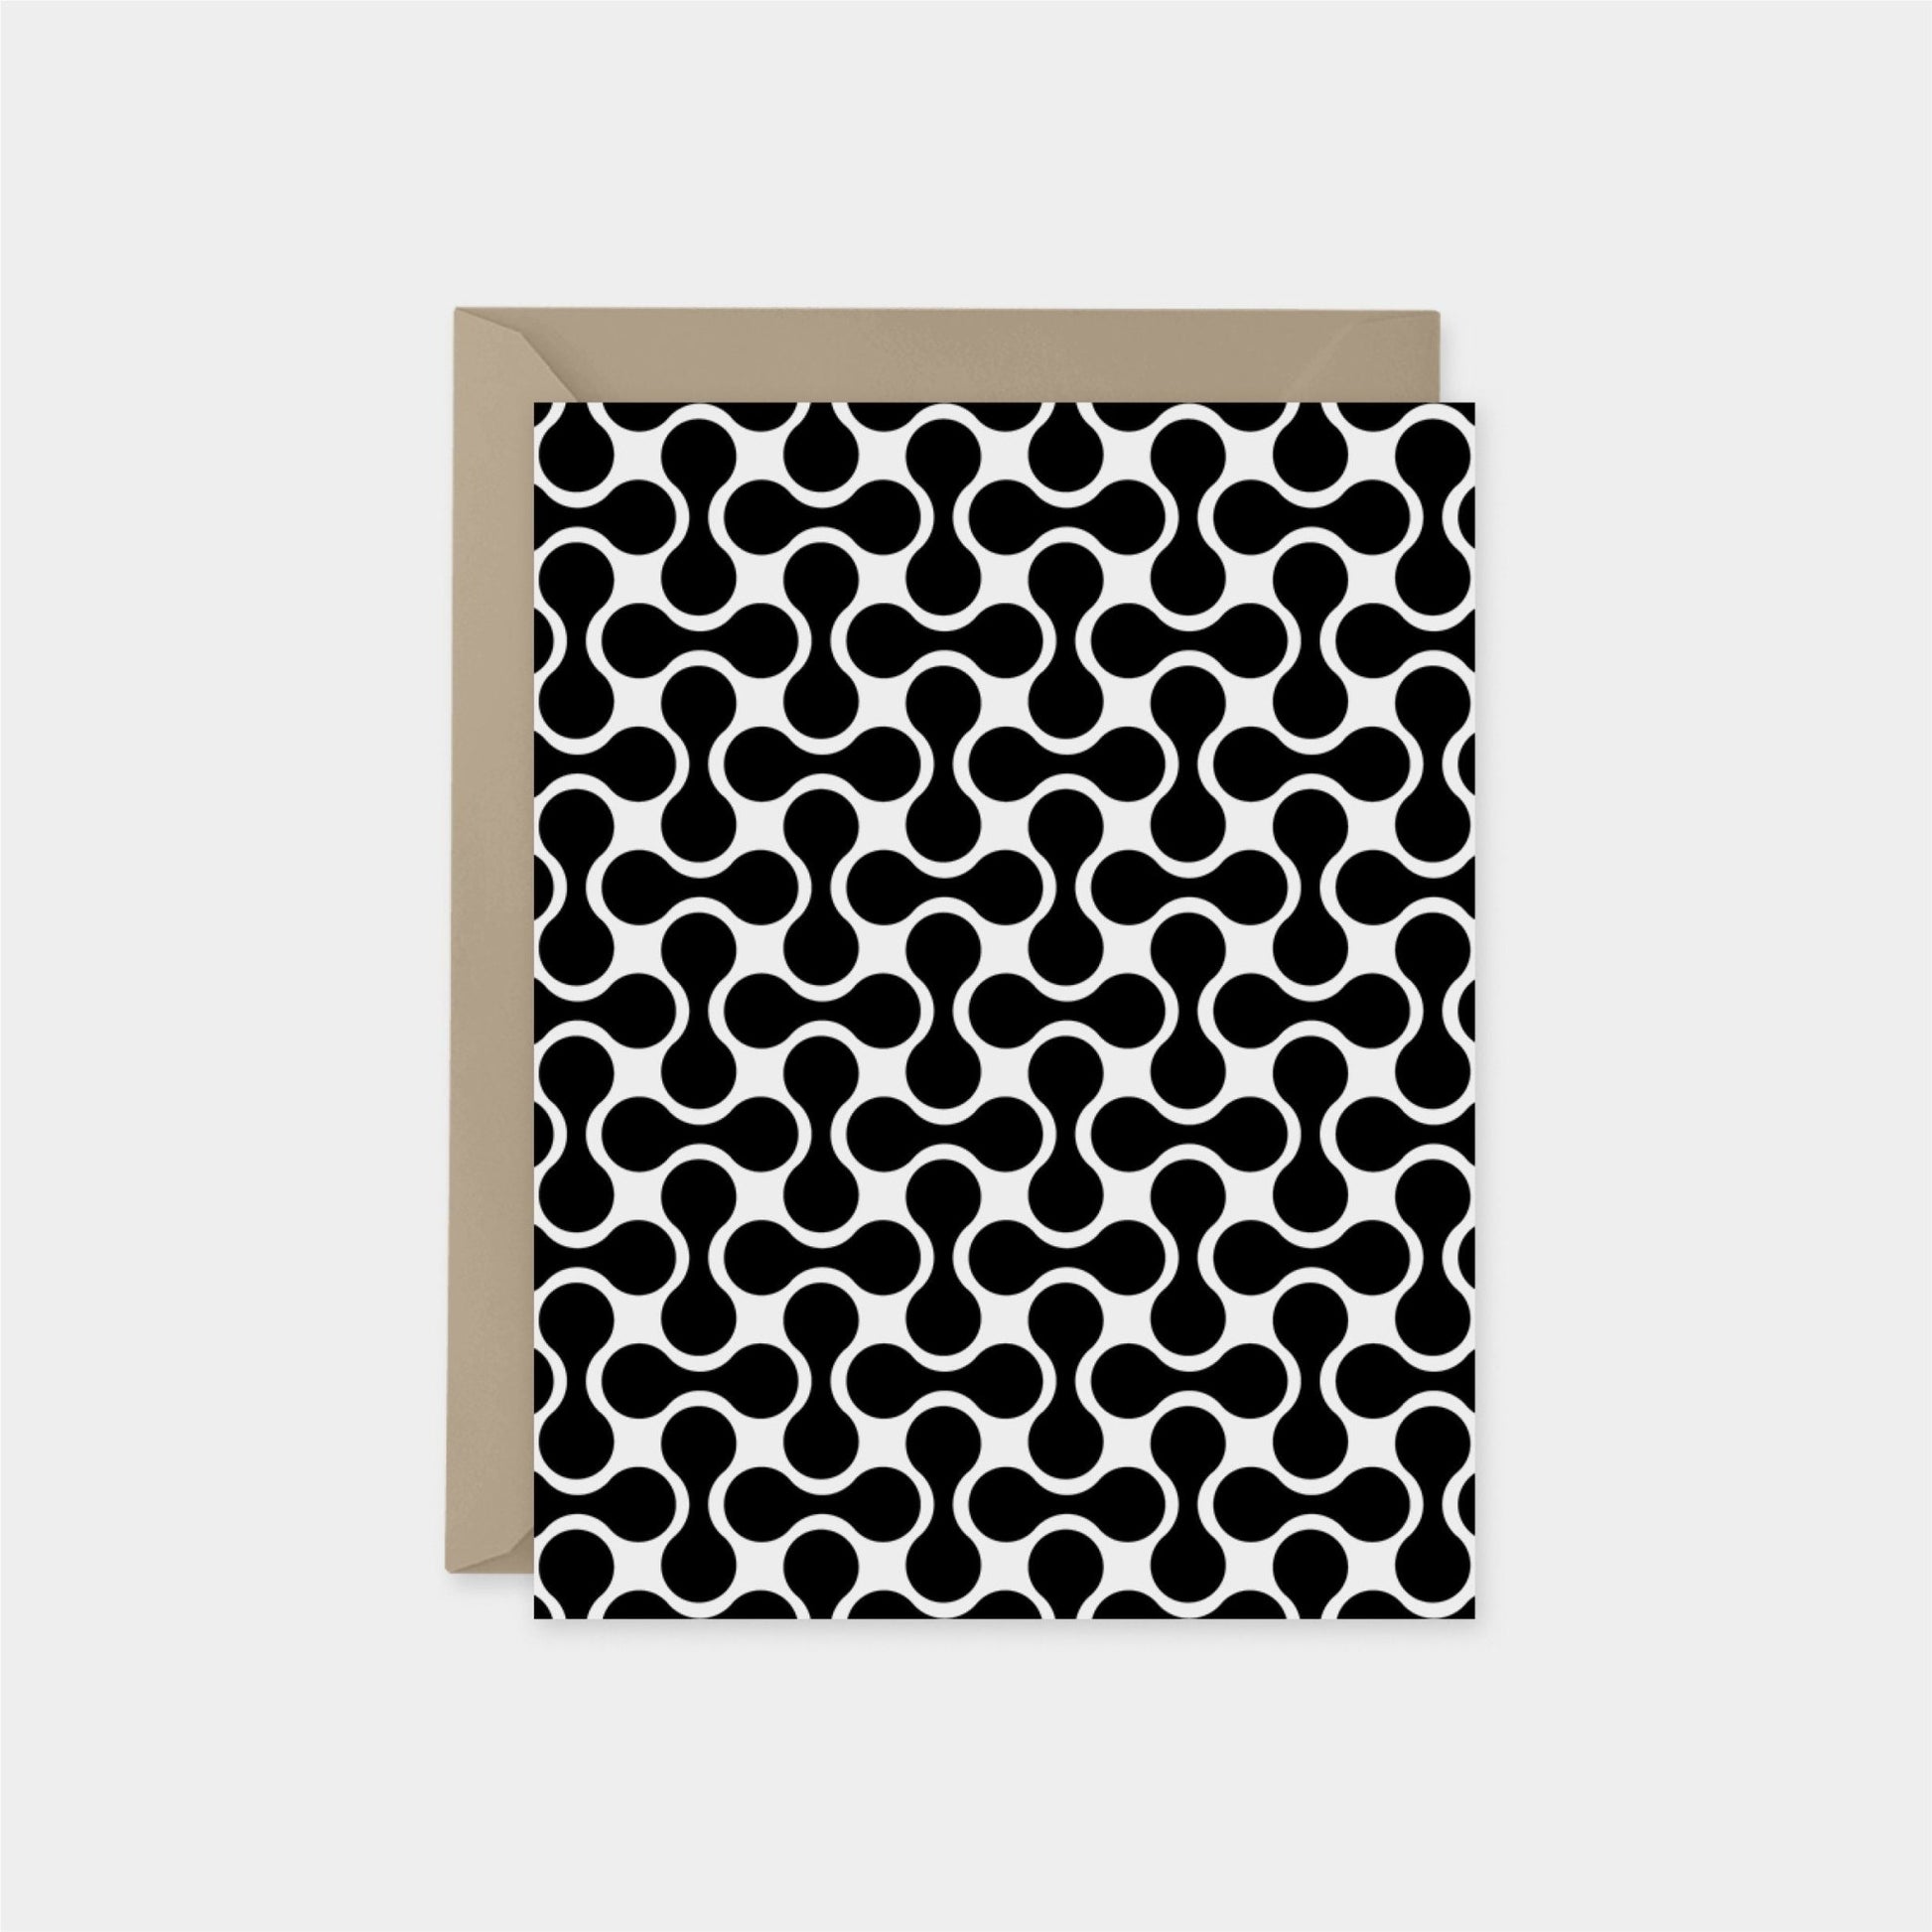 Minimal Modern Black and White Card VII The Design Craft